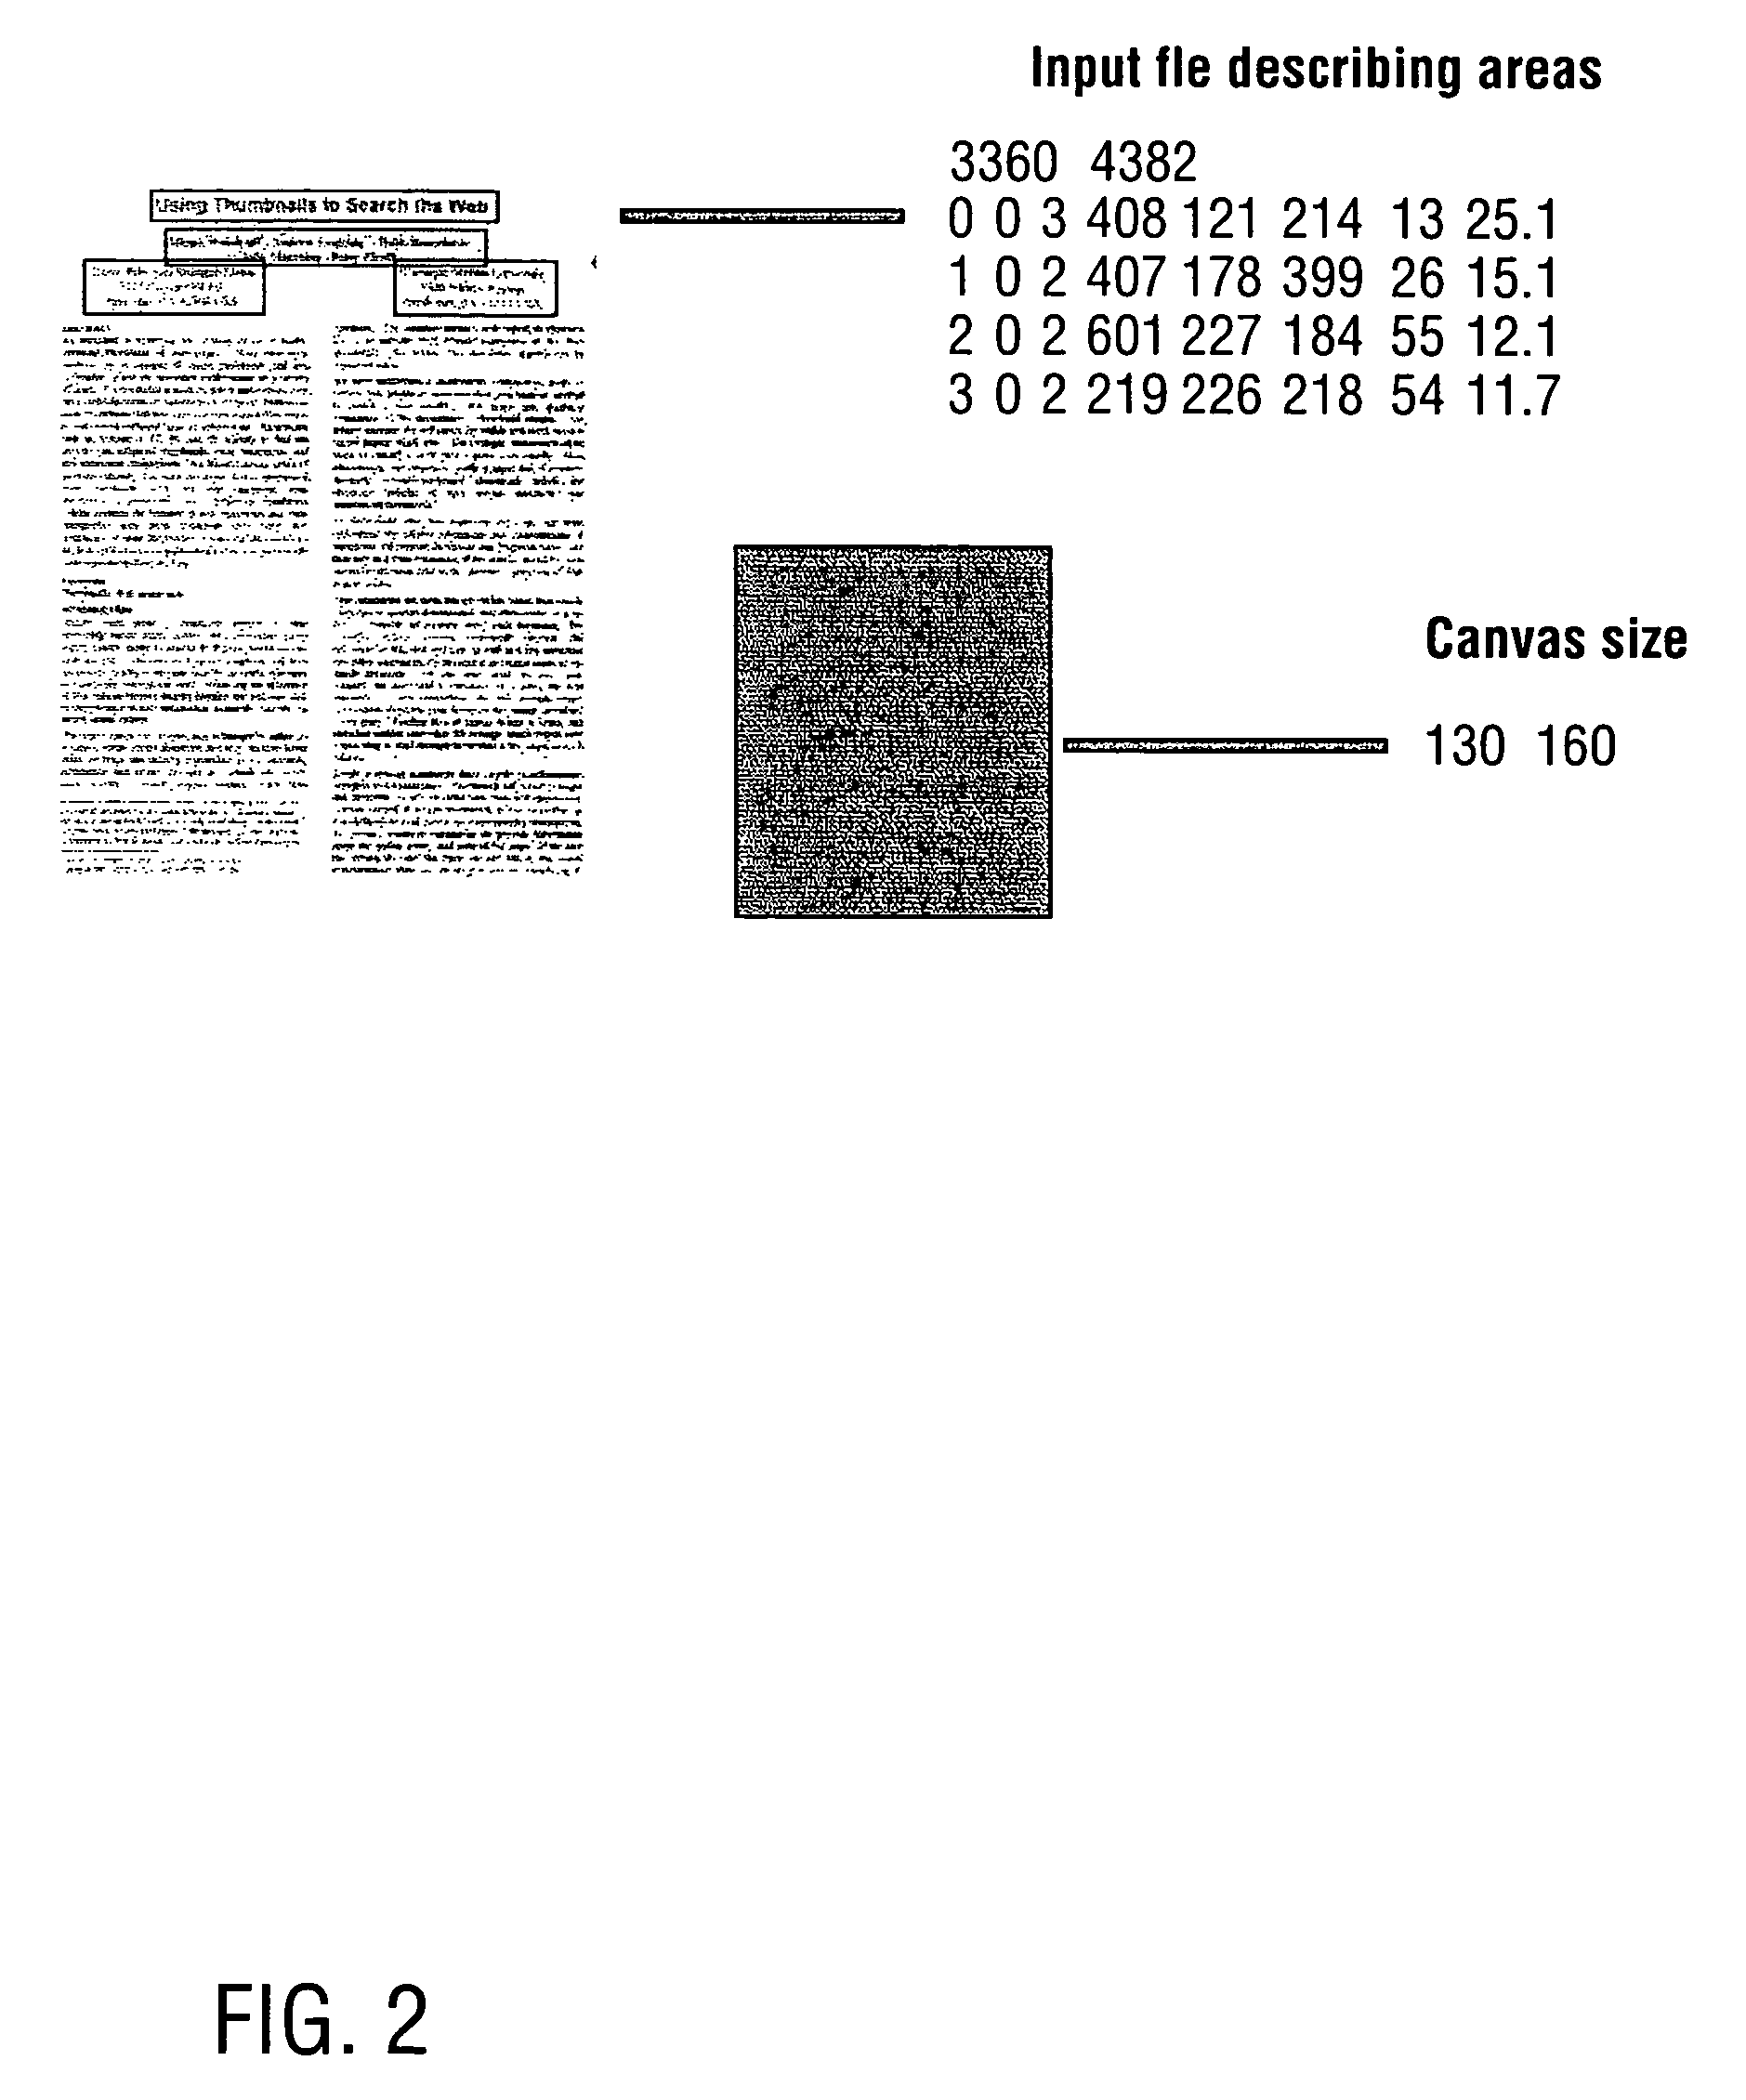 Resolution sensitive layout of document regions